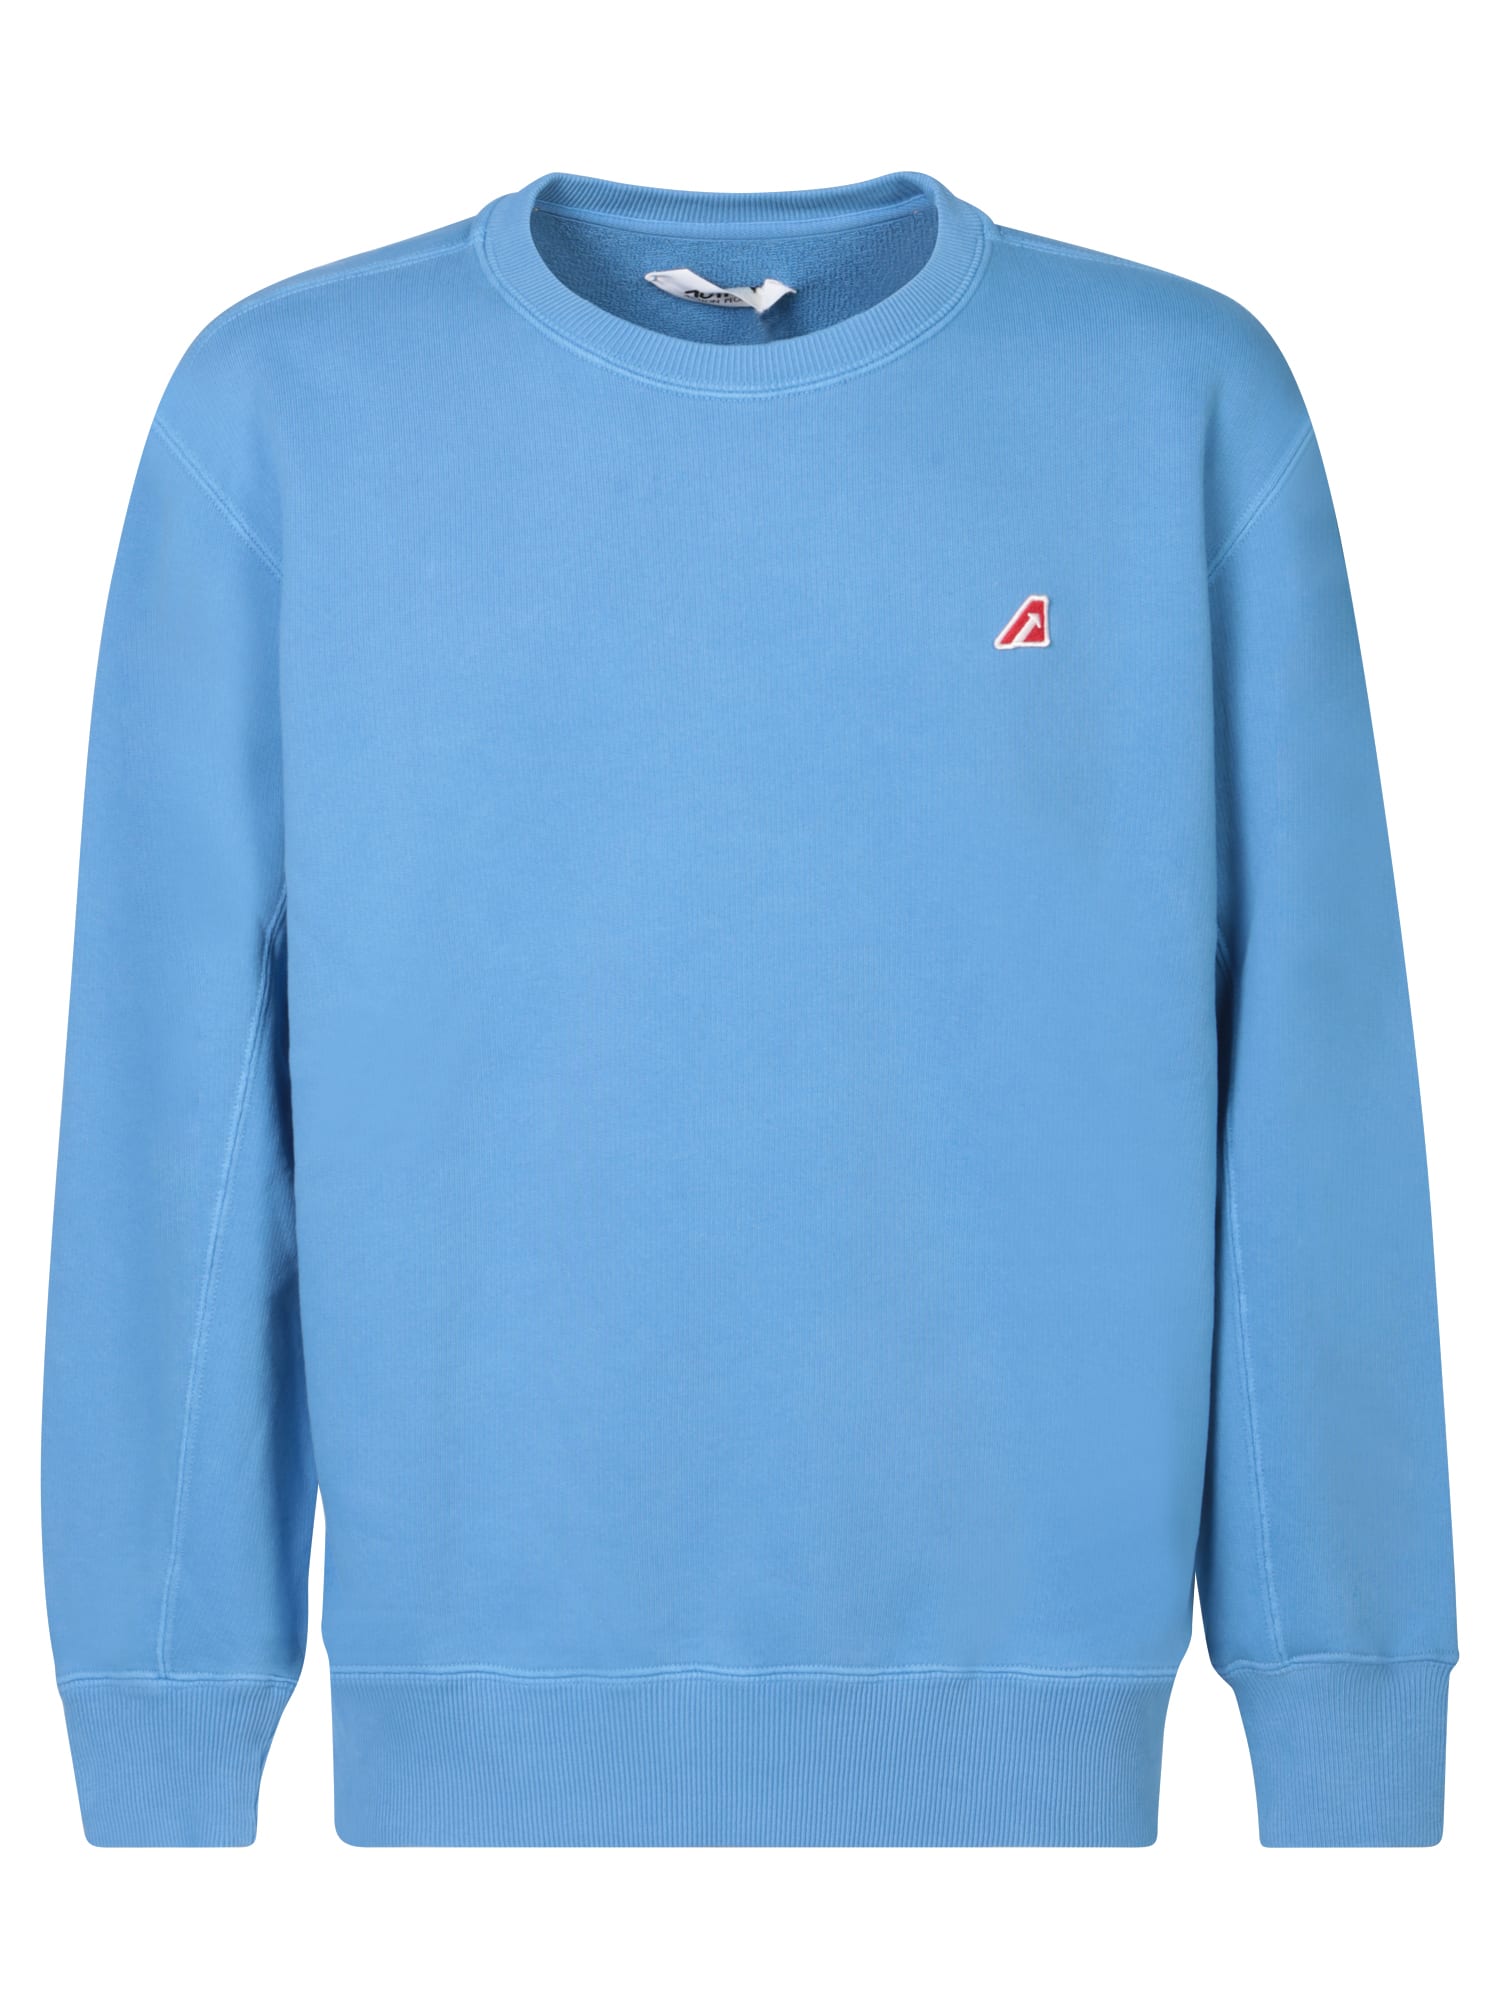 Shop Autry Icon Light Blue Sweatshirt